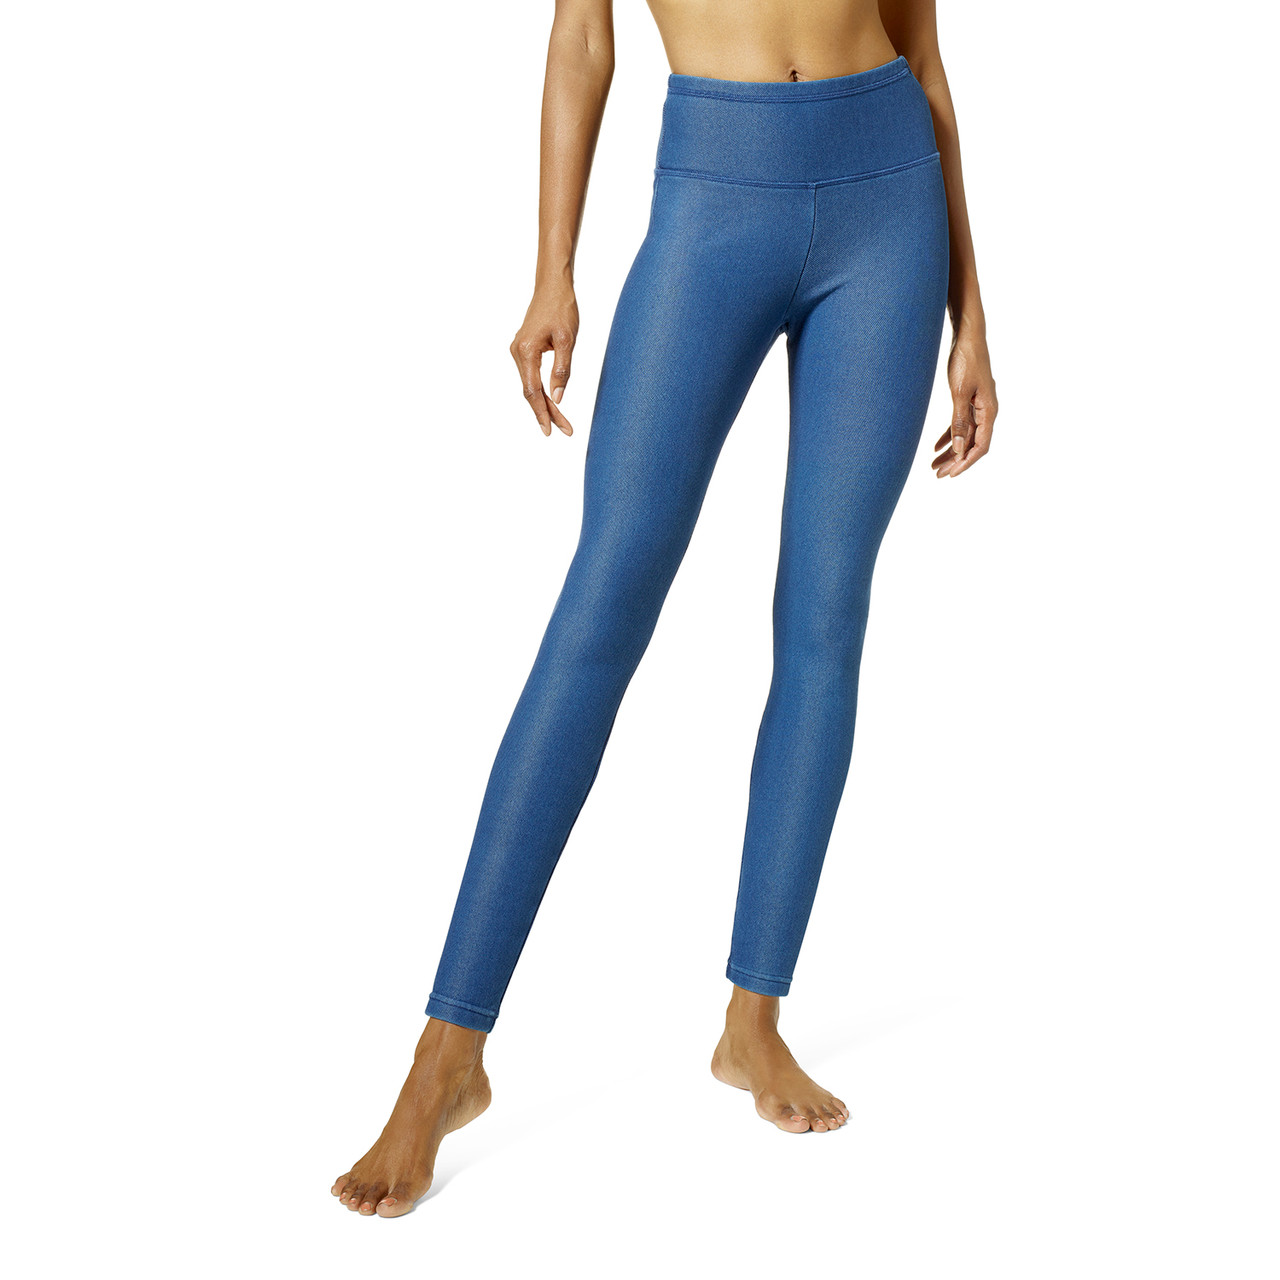 Buy Go Colors Women Solid Dark Jean Blue Cotton Cropped Leggings